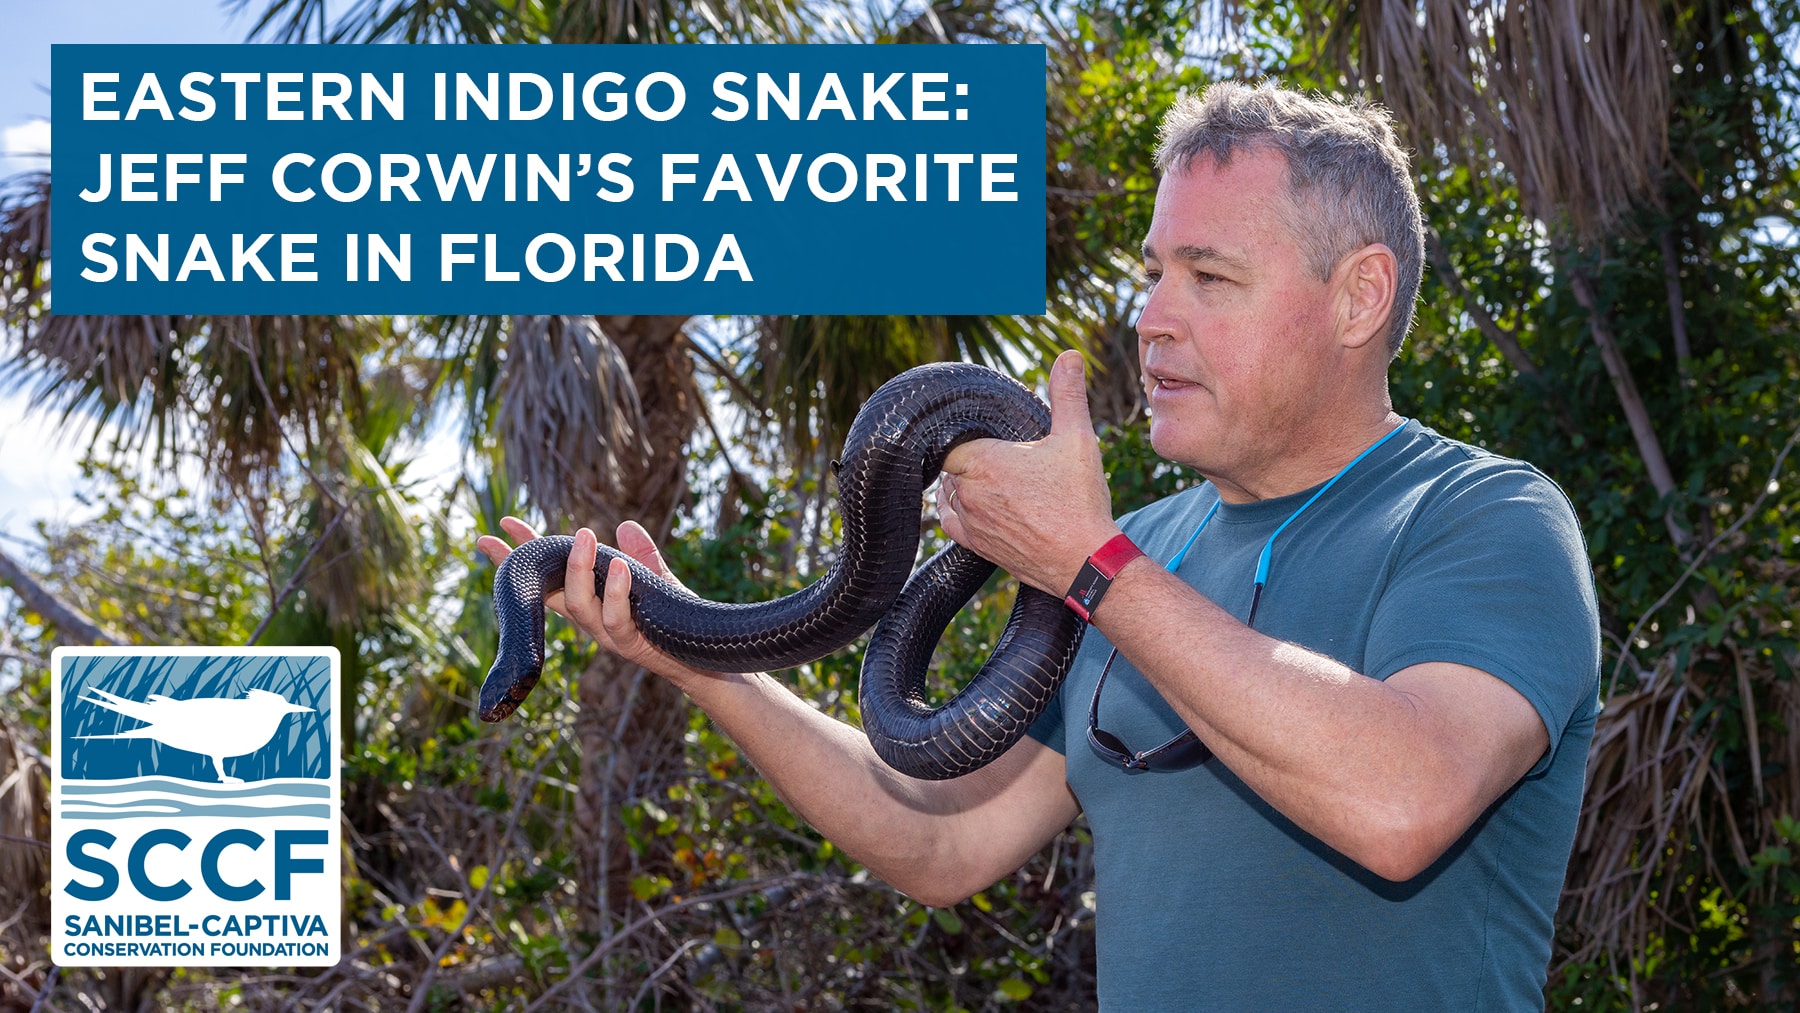 image of man holding snake with text 'eastern indigo snake: jeff corwin's favorite snake in Florida'